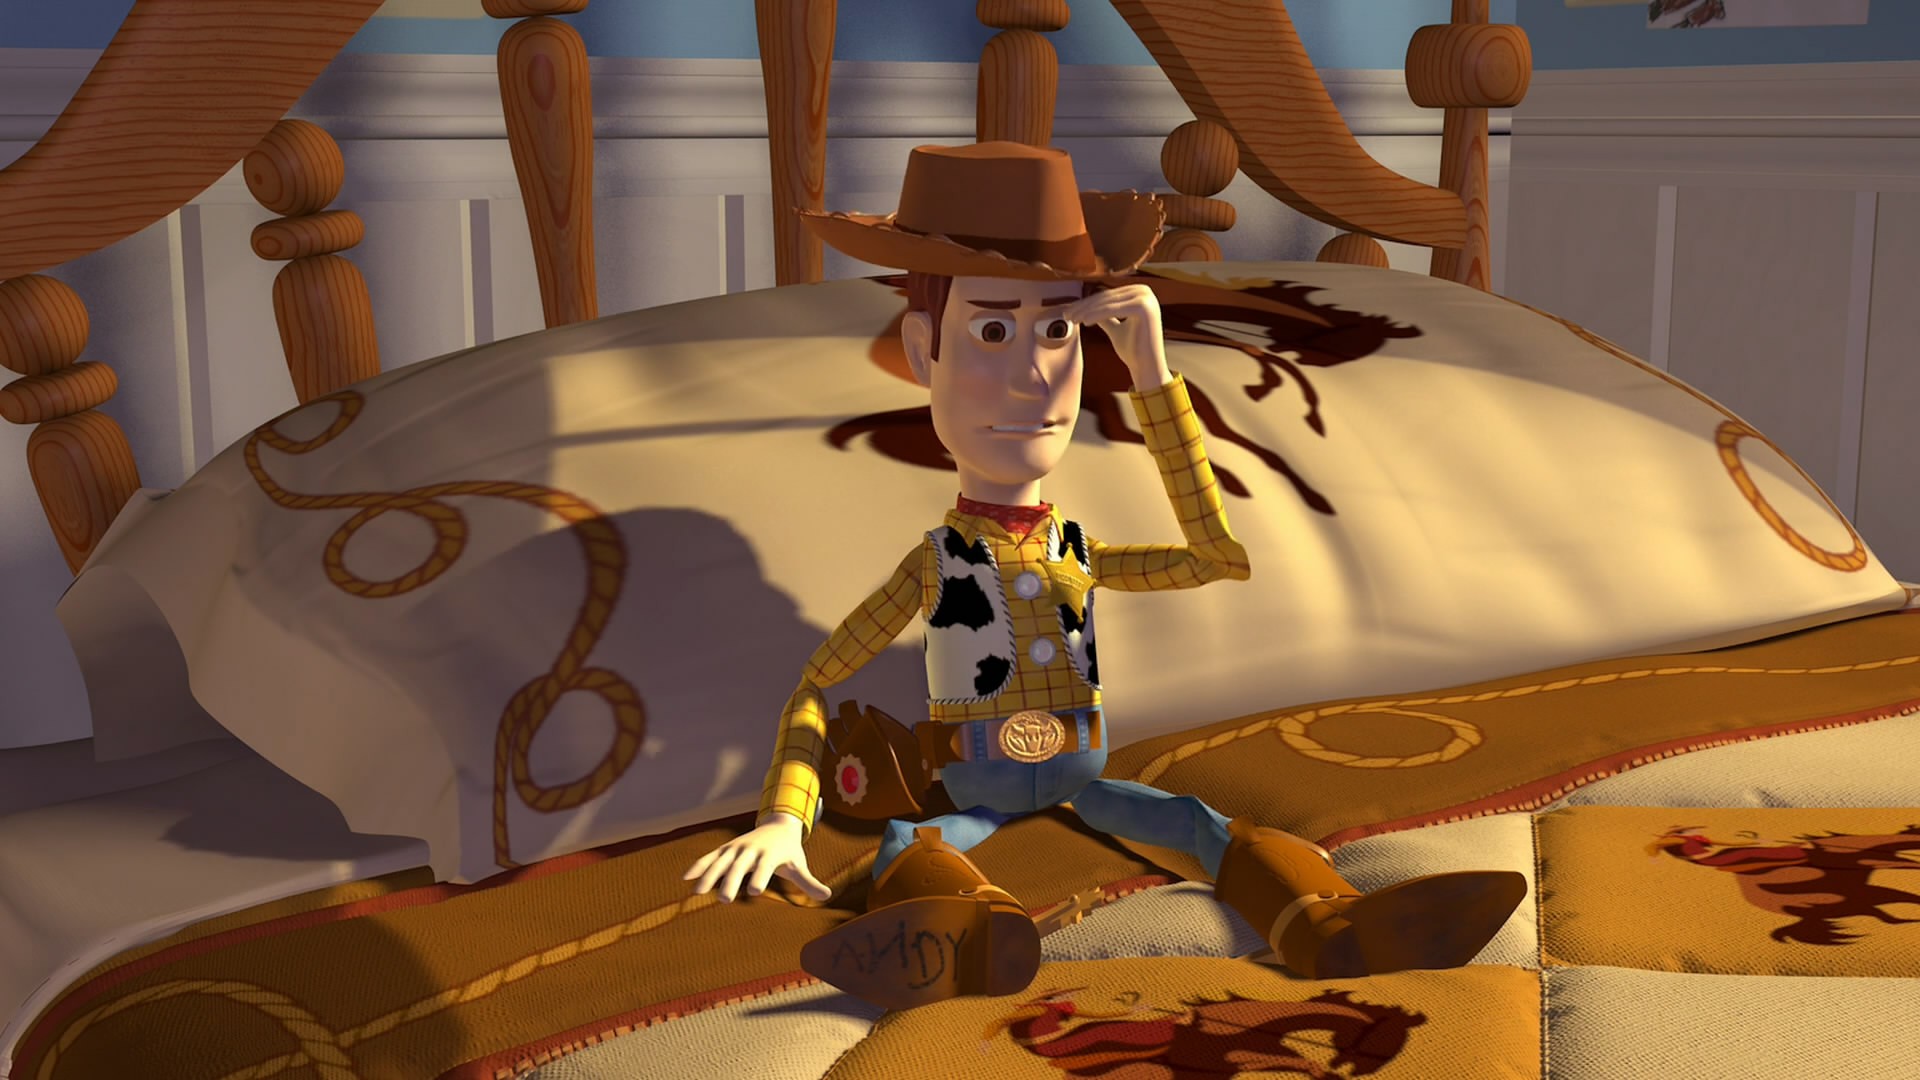 General 1920x1080 Sheriff Woody Toy Story Disney Pixar movies animated movies Pixar Animation Studios